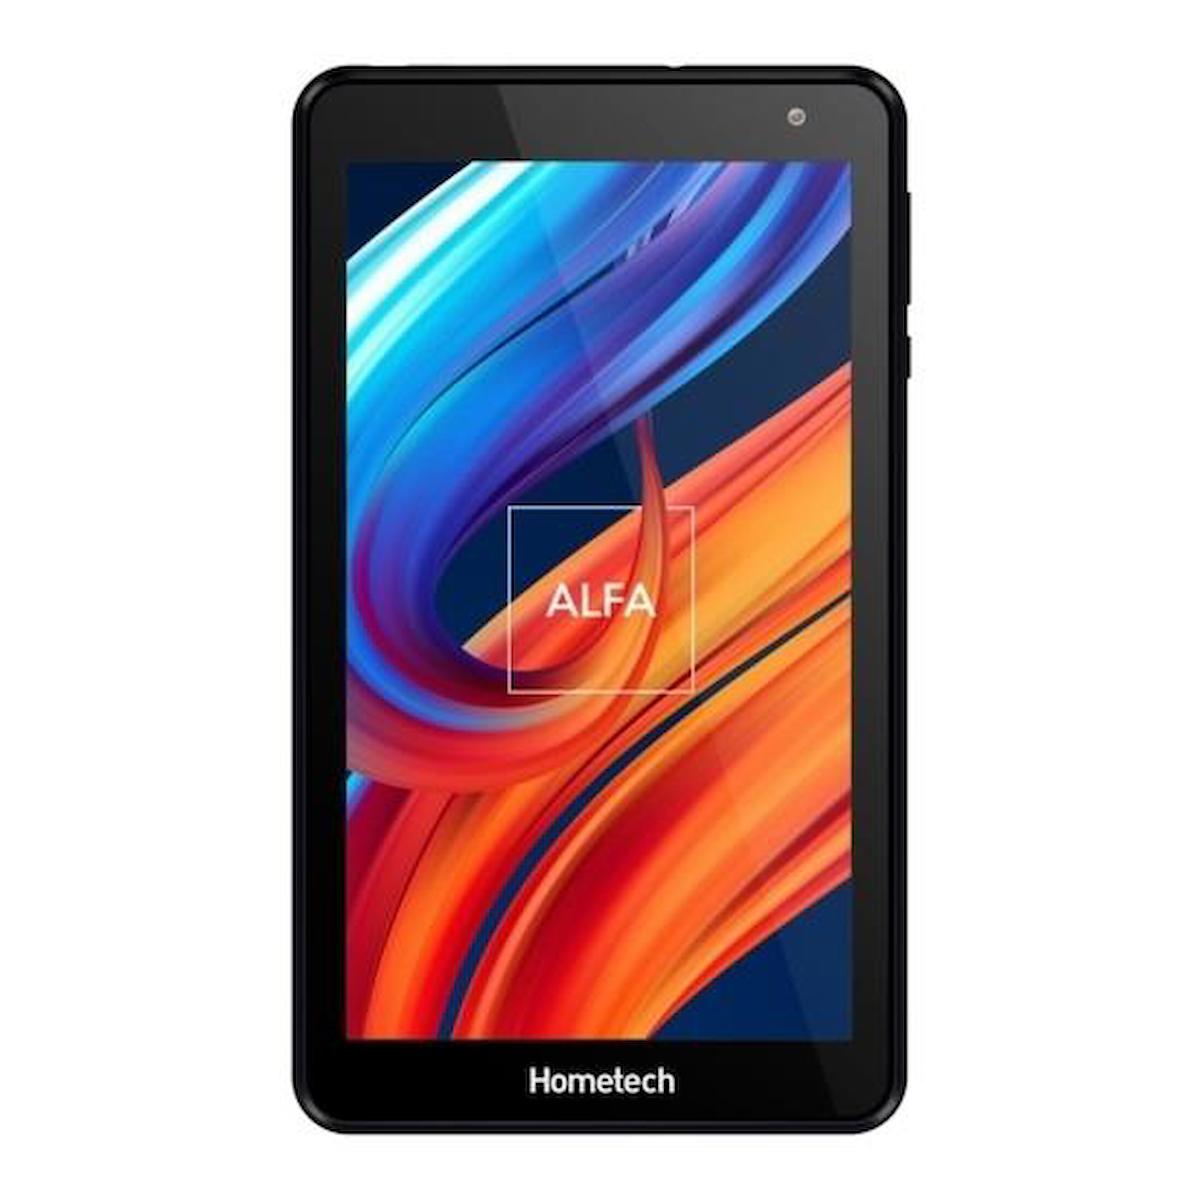 Hometech 7M 16 GB Android 1 GB Ram 7.0 inç Tablet Siyah